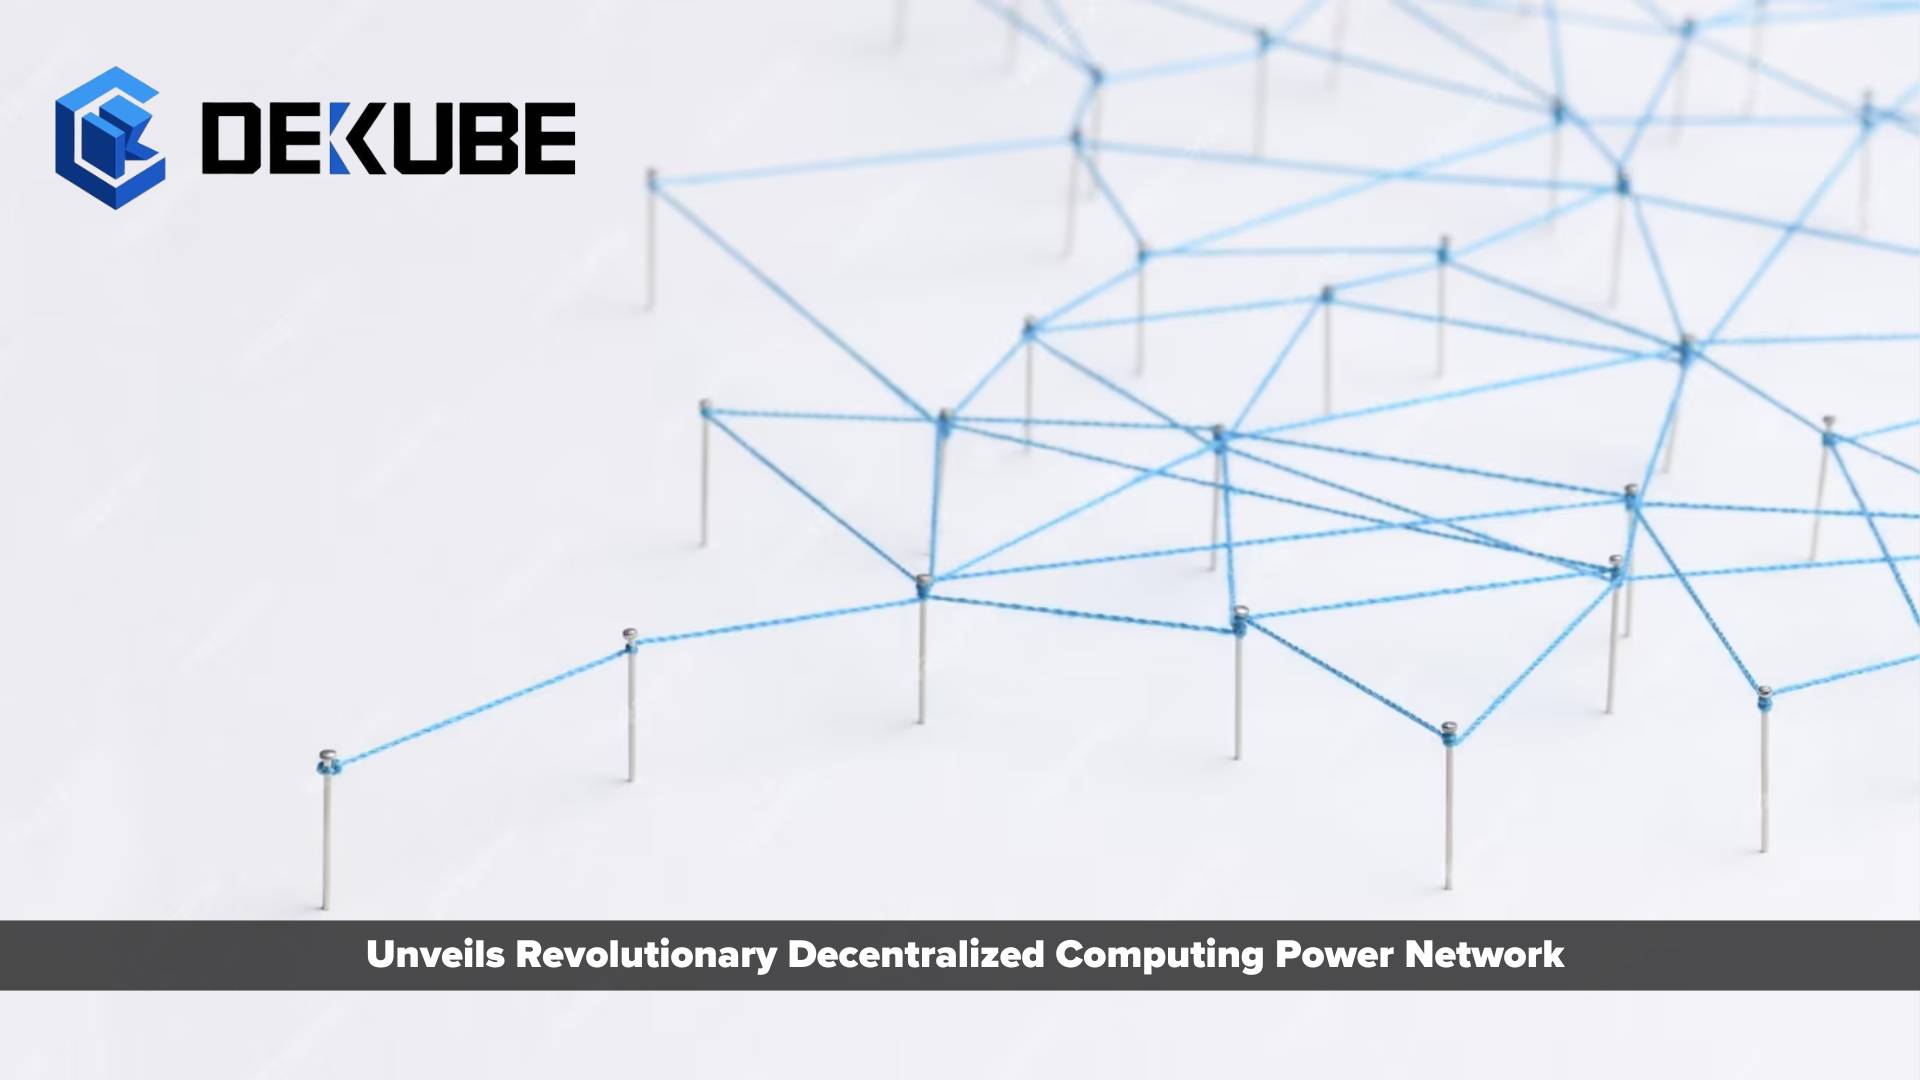 Dekube Unveils Revolutionary Decentralized Computing Power Network to Democratize AI Development